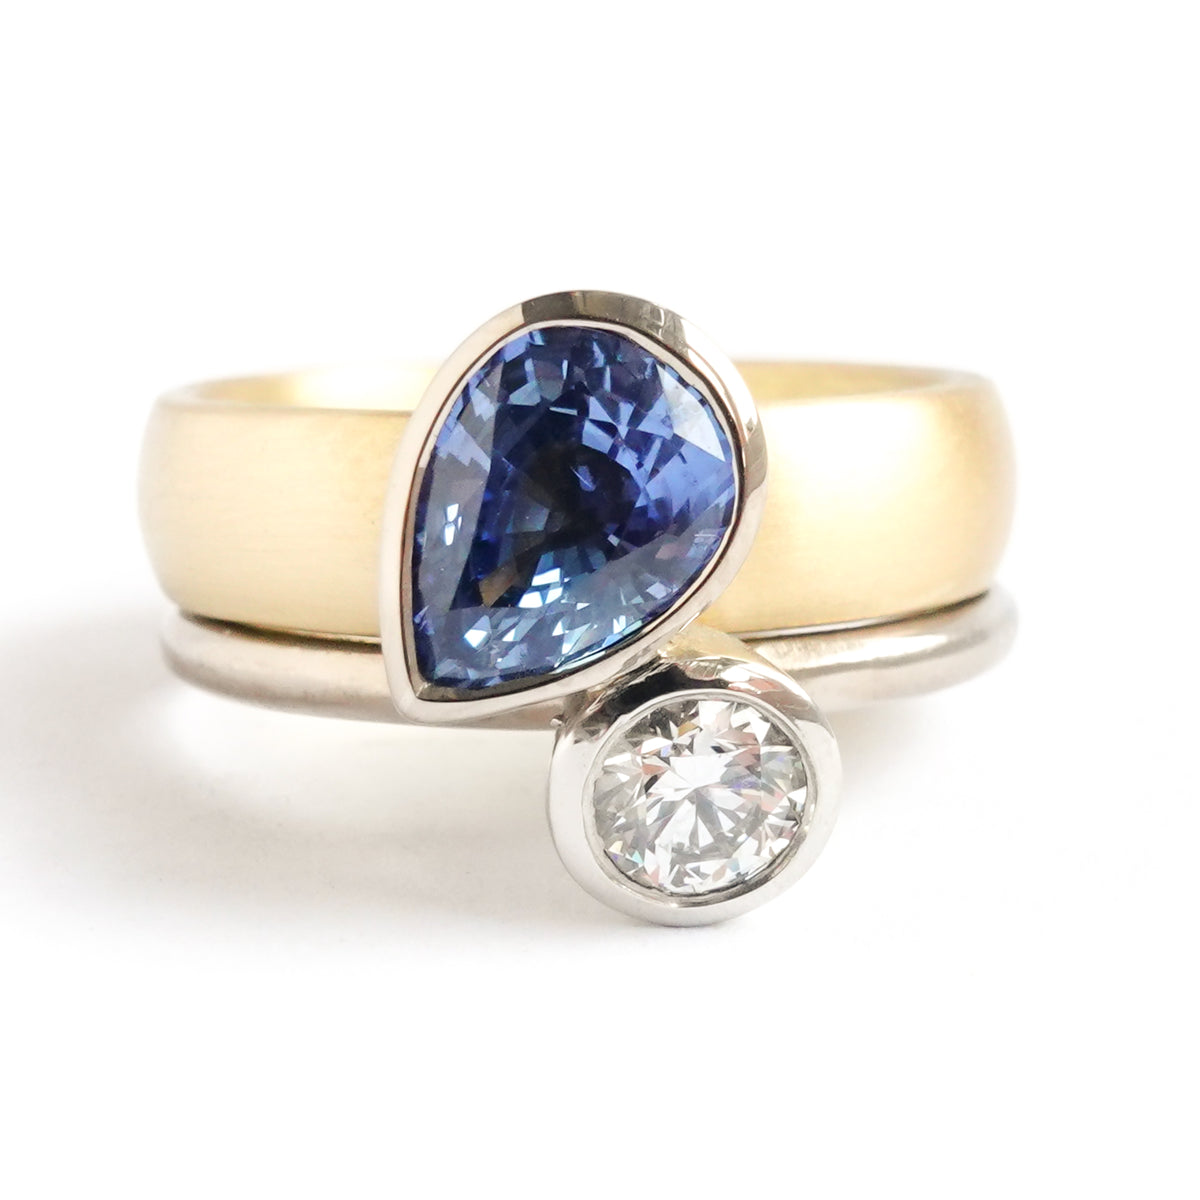 Modern Sapphire and Diamond Ladies Ring with Simple, Elegant Design